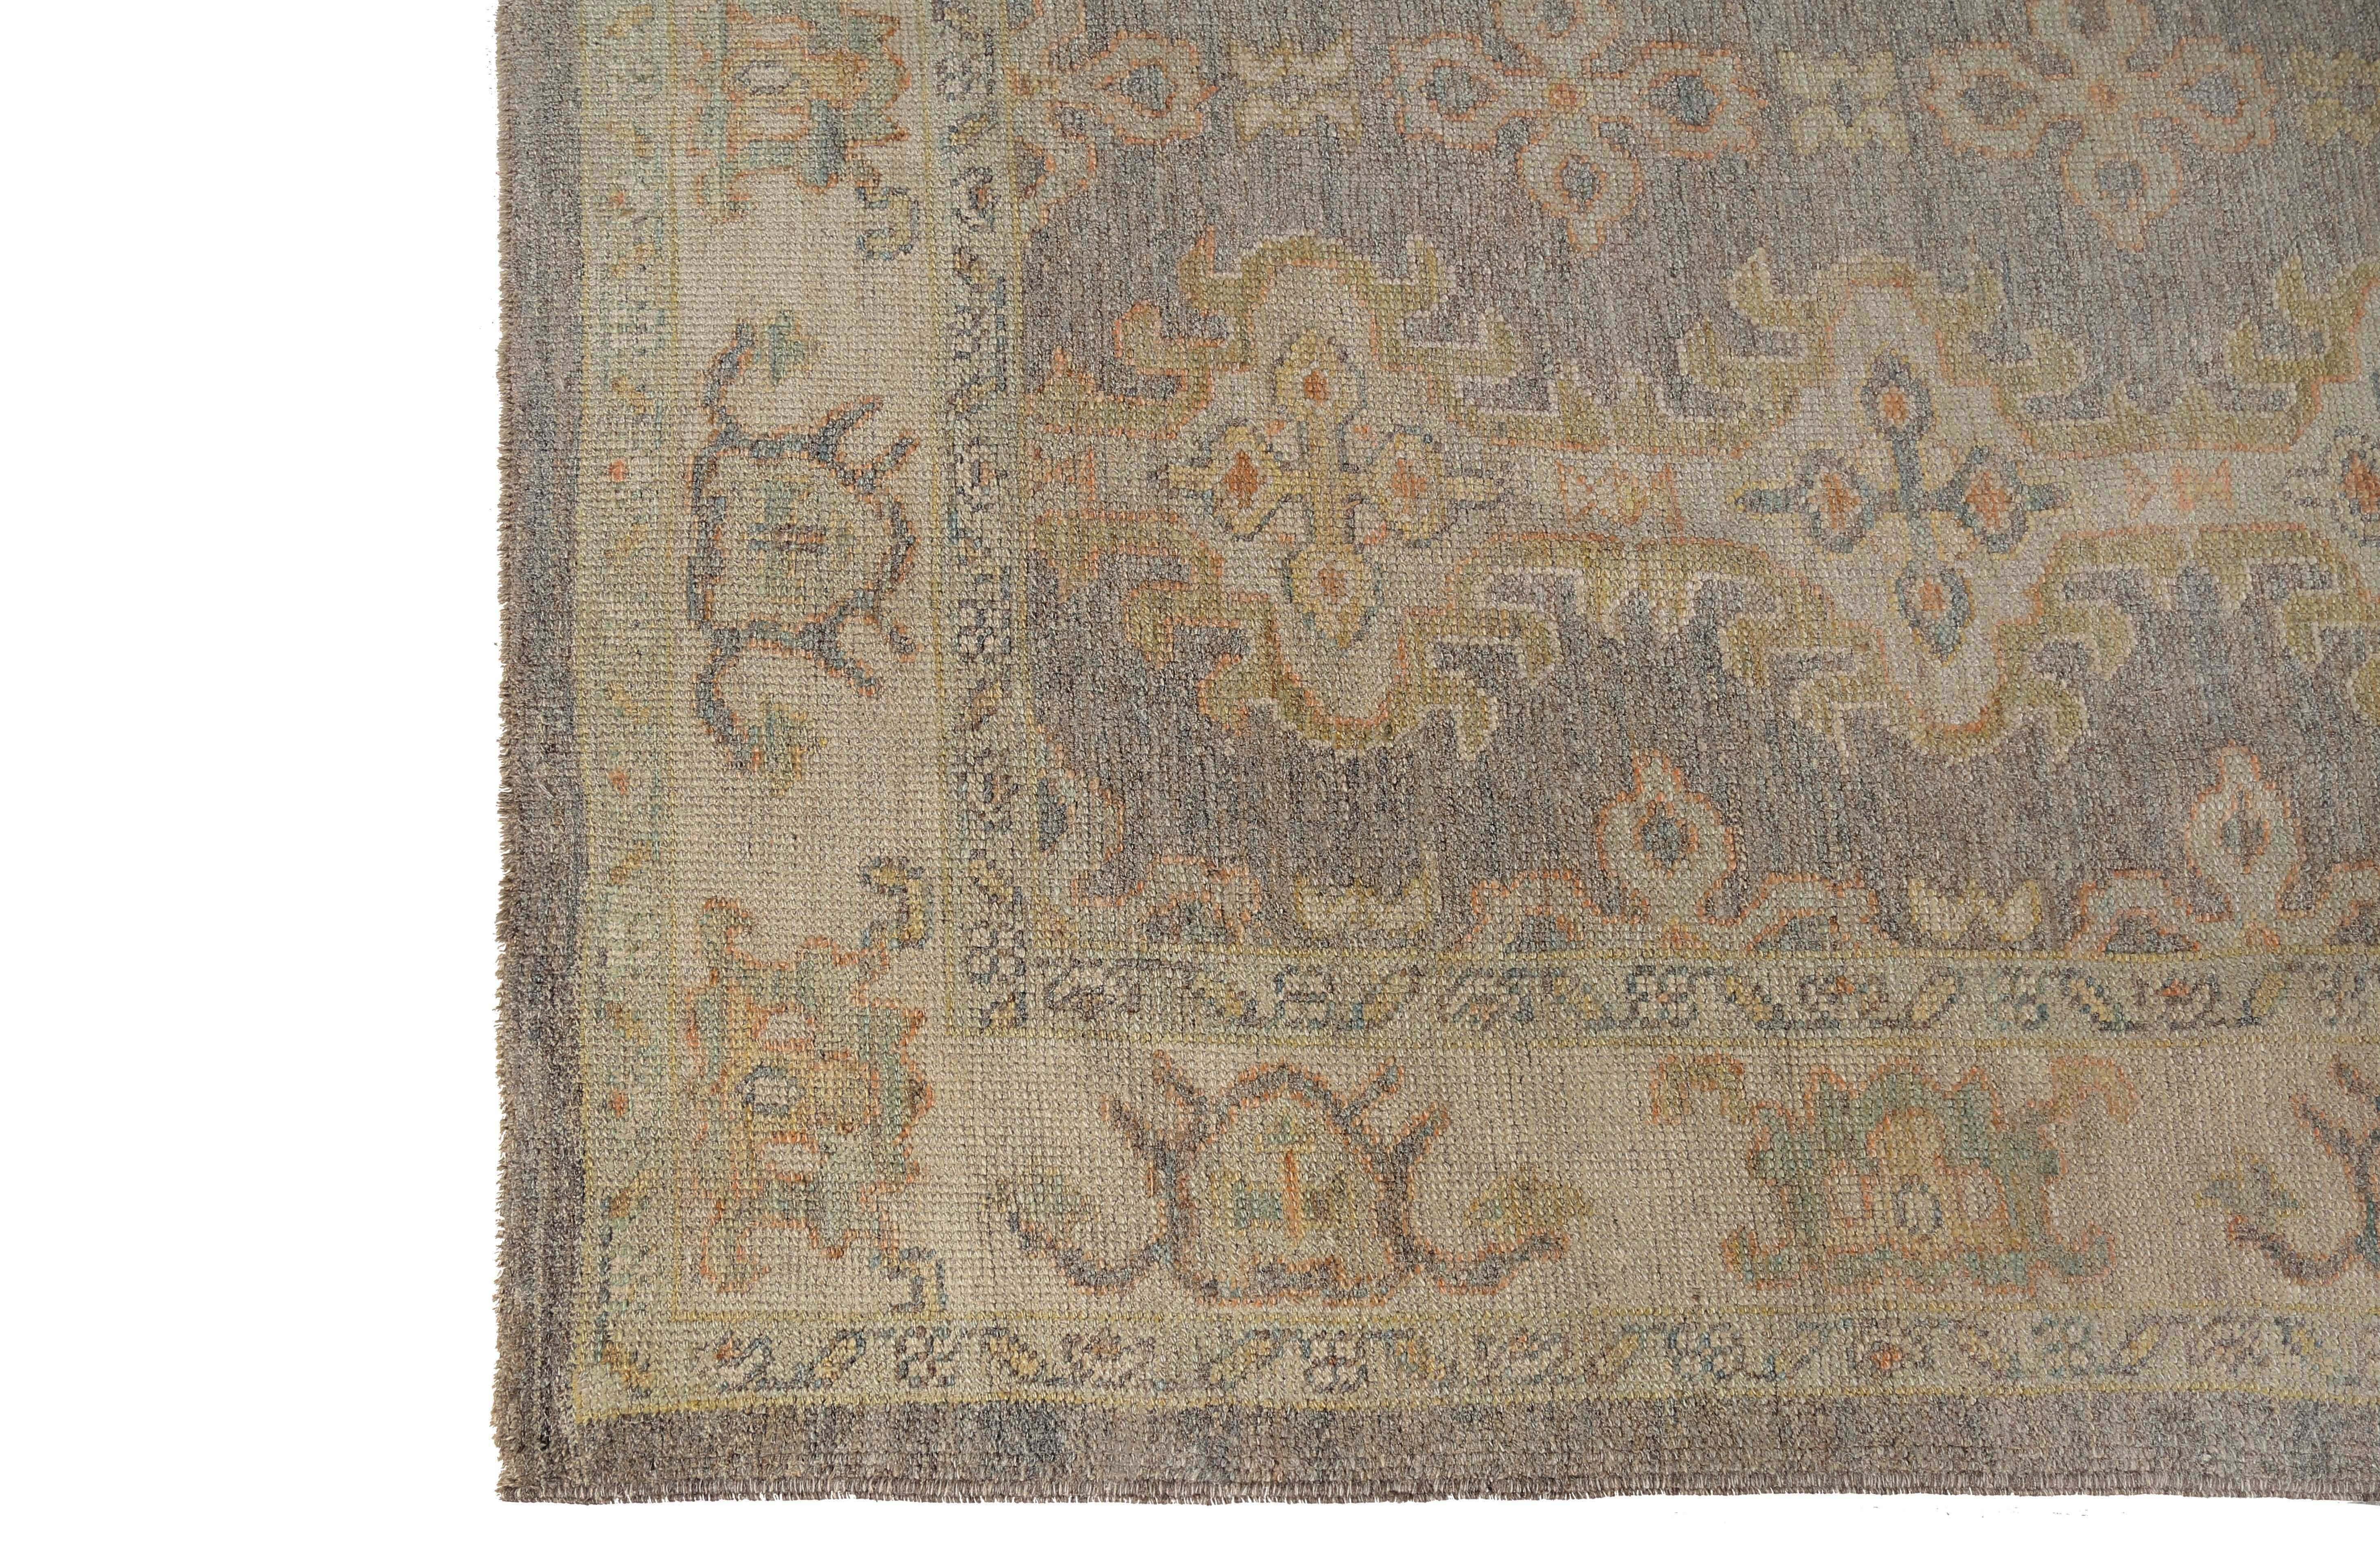 Introducing a stunning handmade Turkish Oushak rug, measuring 6'8X9'1